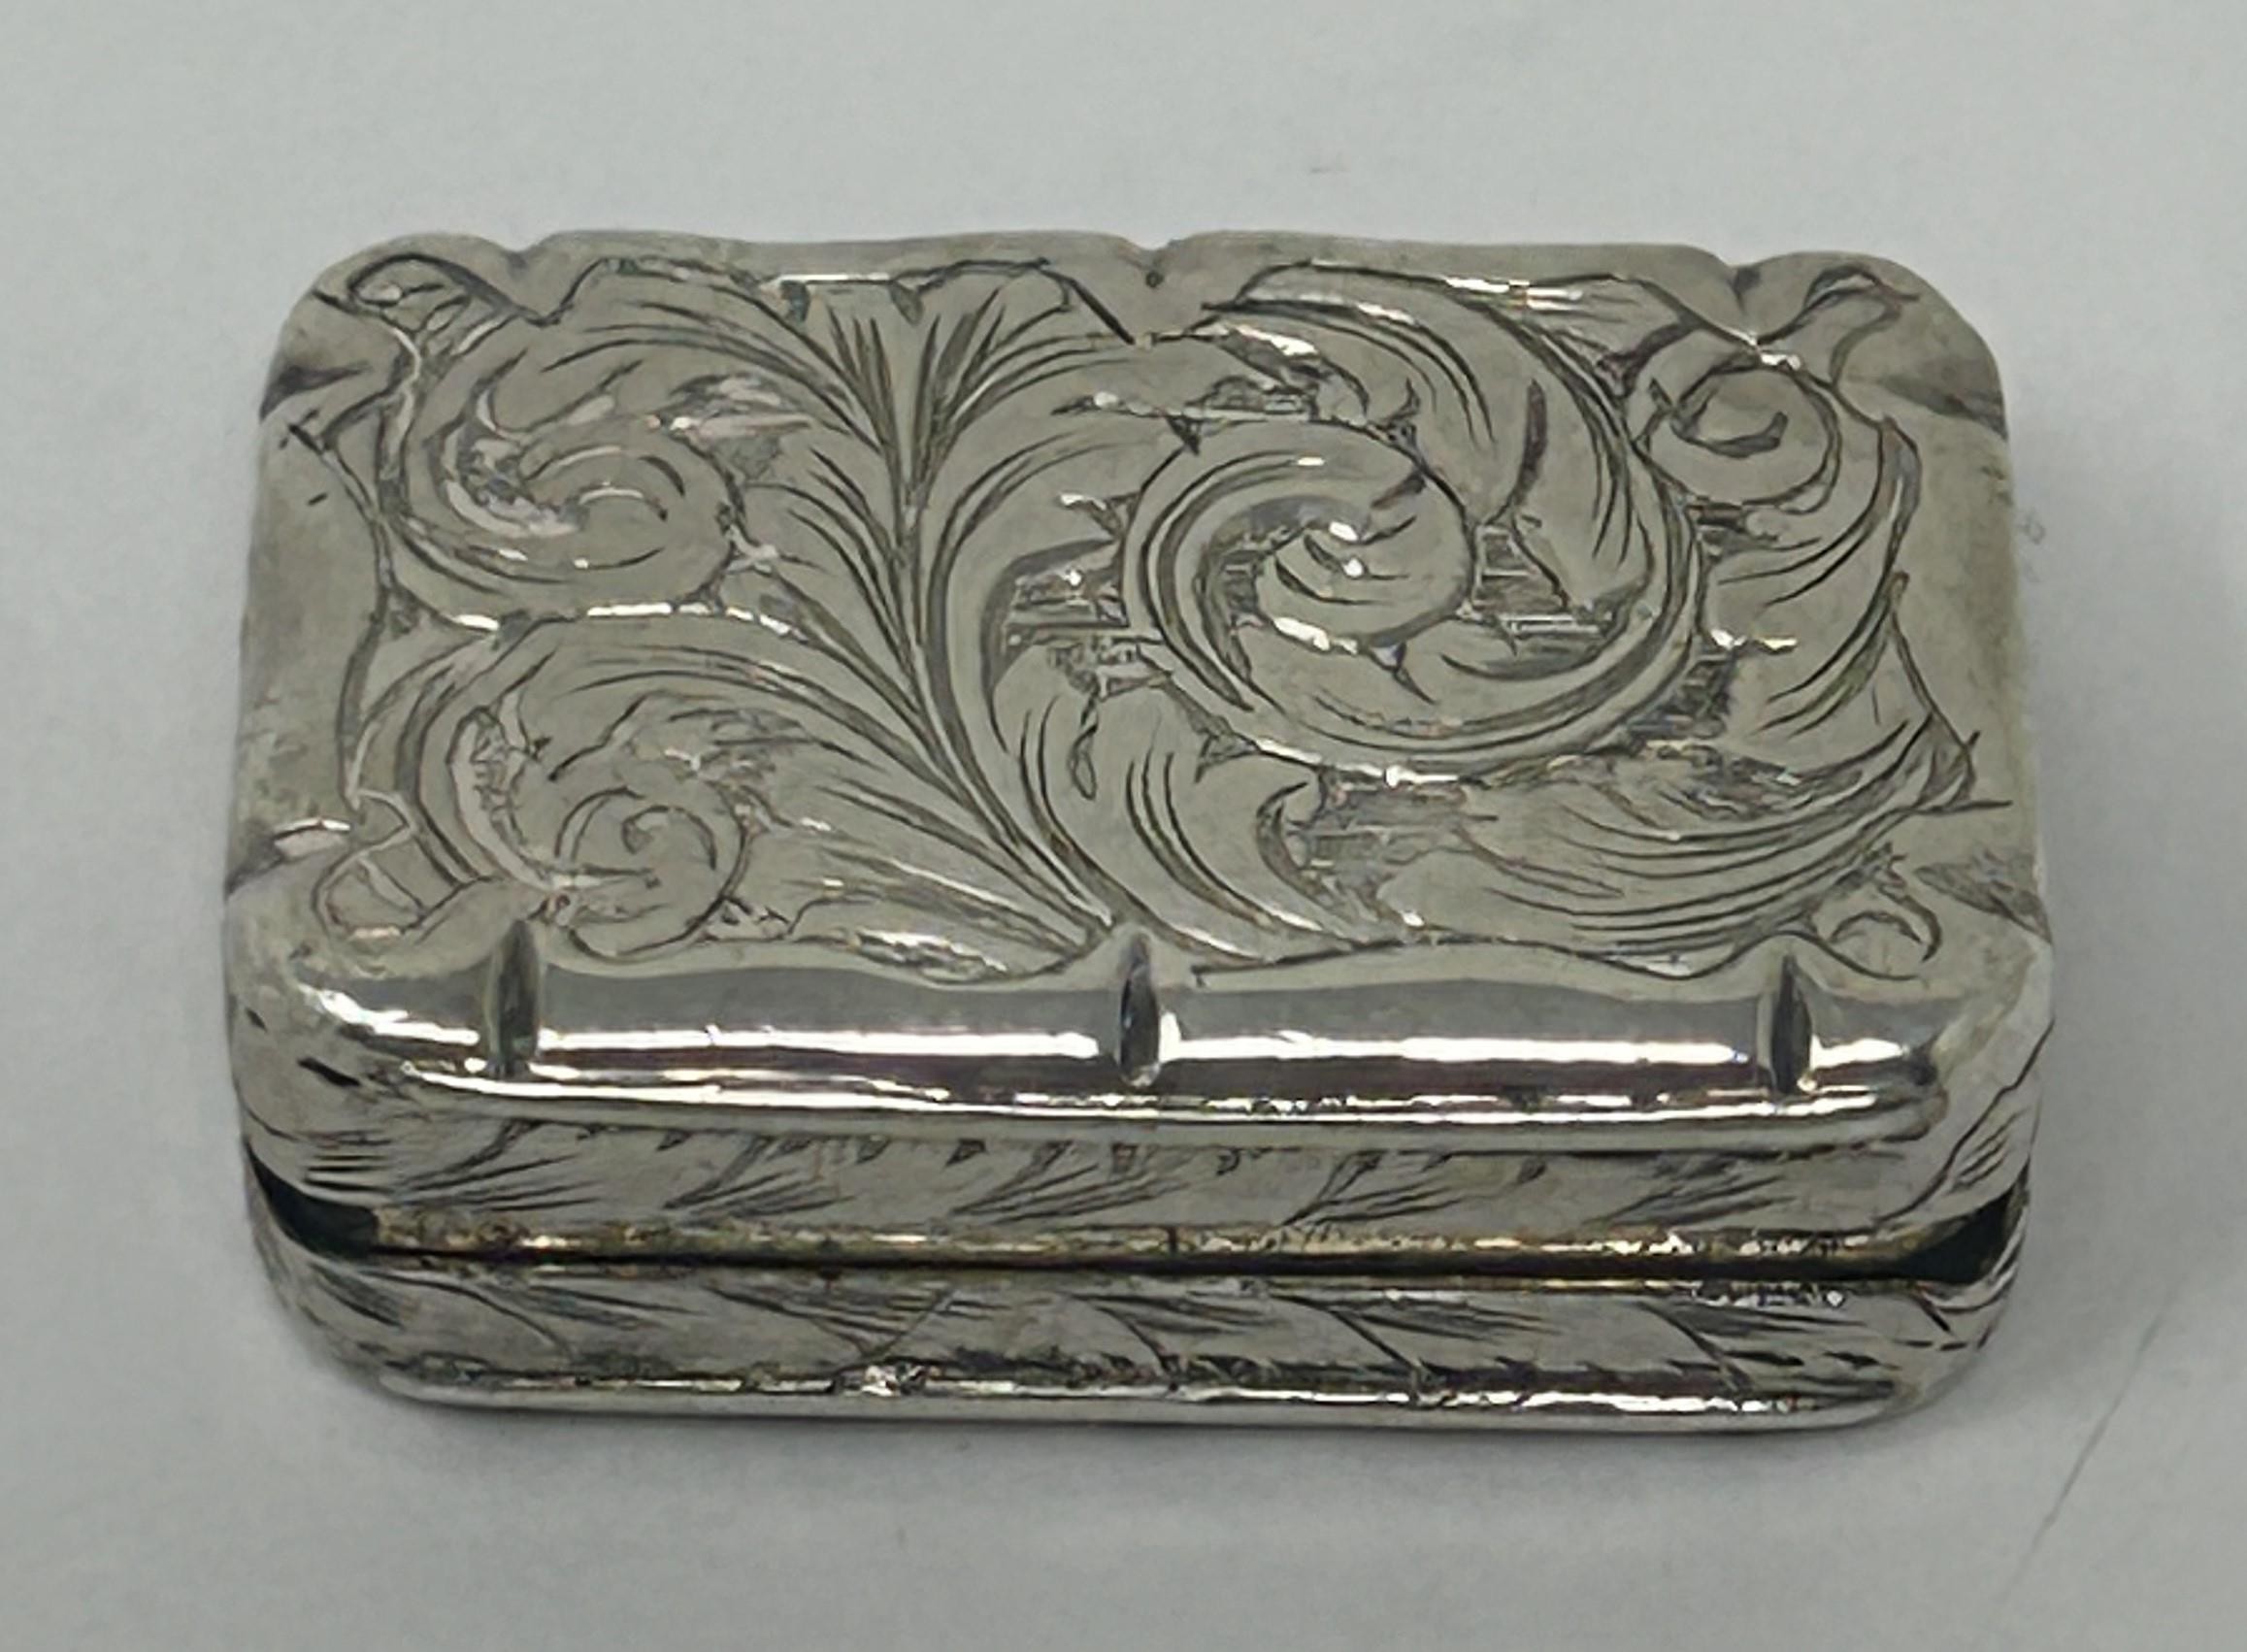 A 19th century silver vinaigrette, 6.2 g - Image 3 of 4